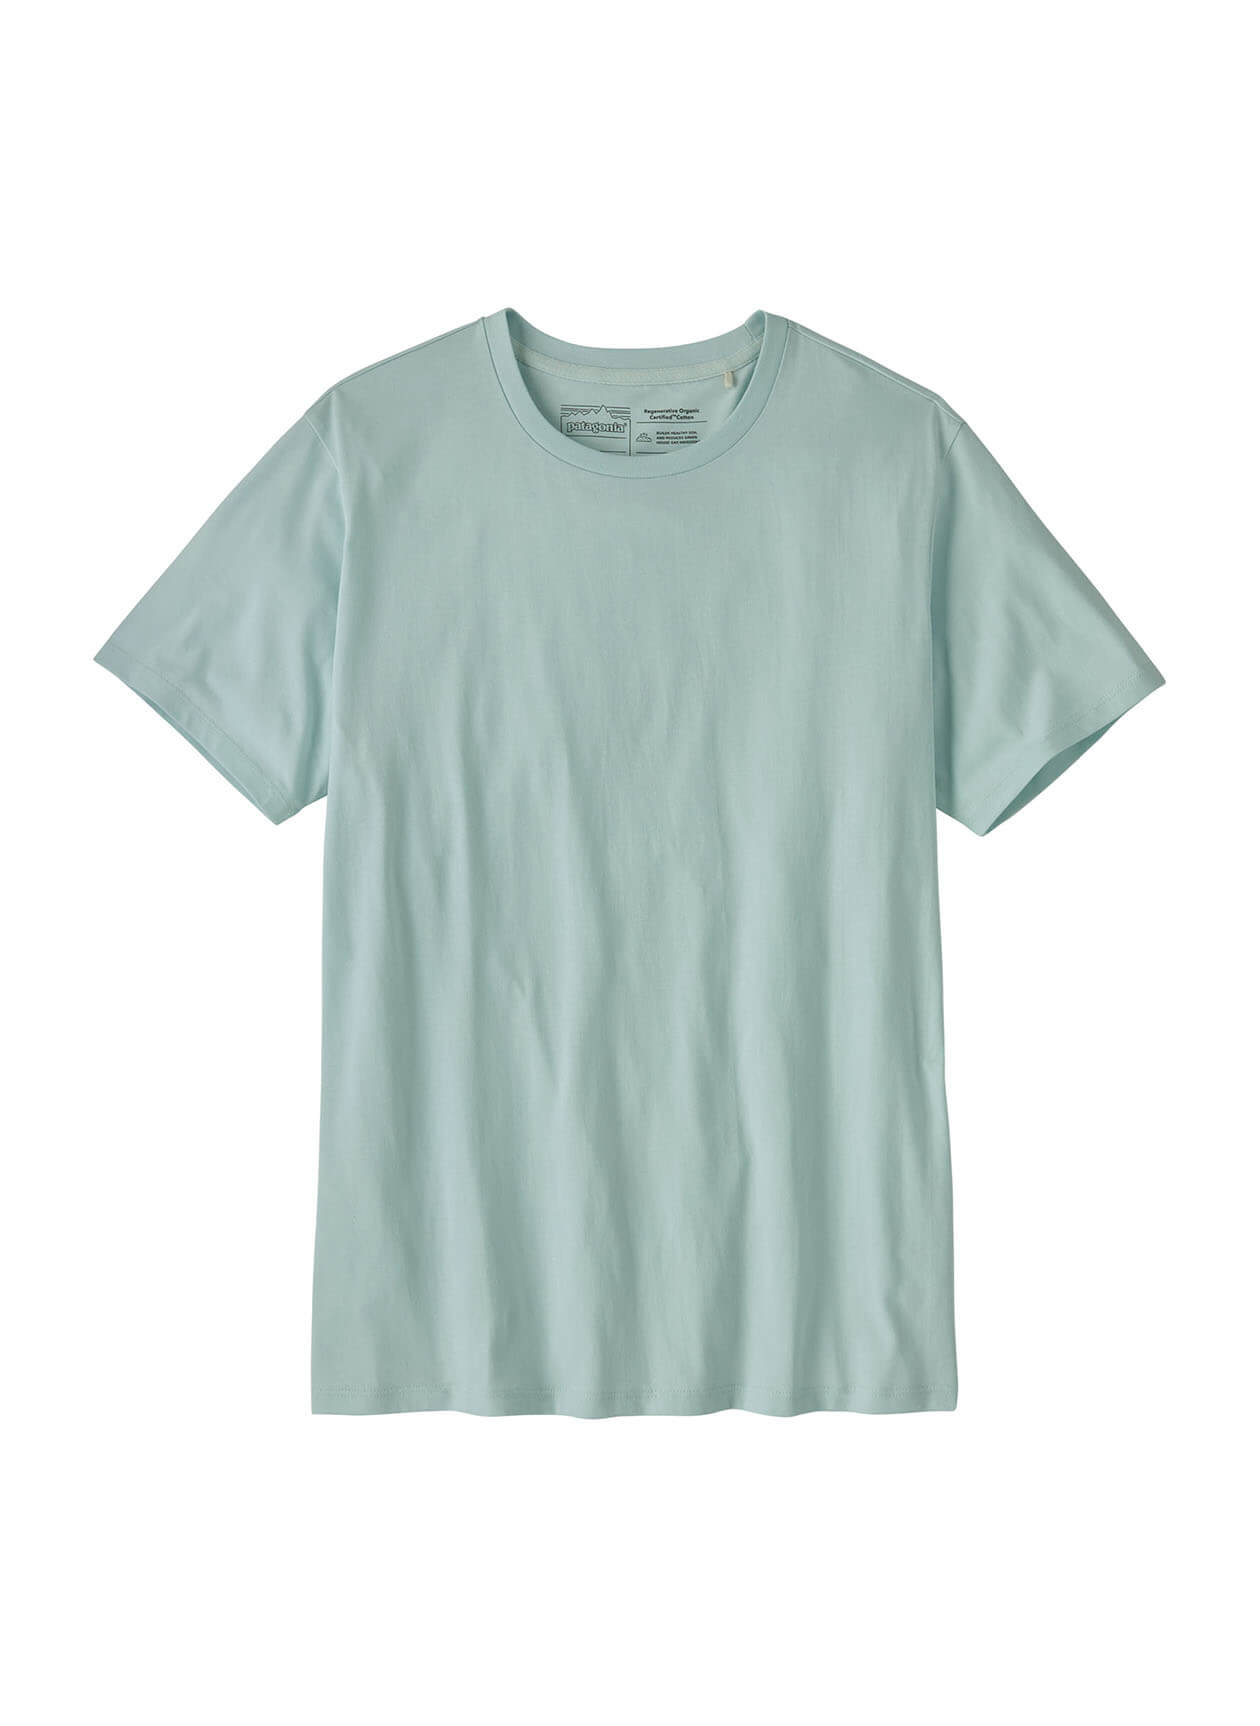 Wispy Green Patagonia Unisex Daily T-Shirt Men's